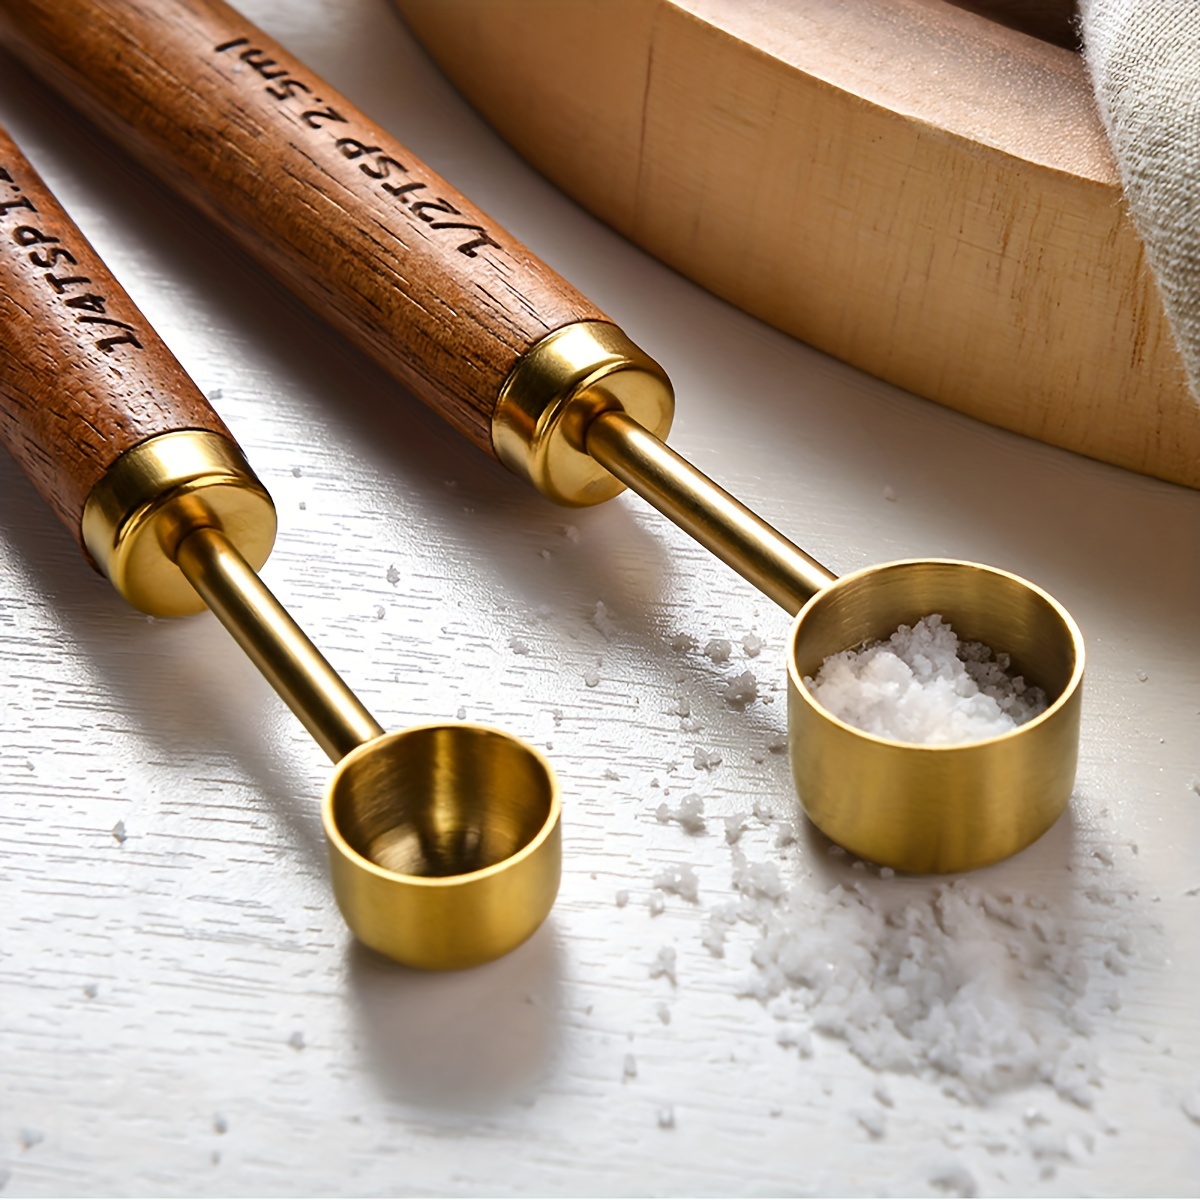 4Pcs/set Measuring Spoon Set Wooden Handle Stainless Steel